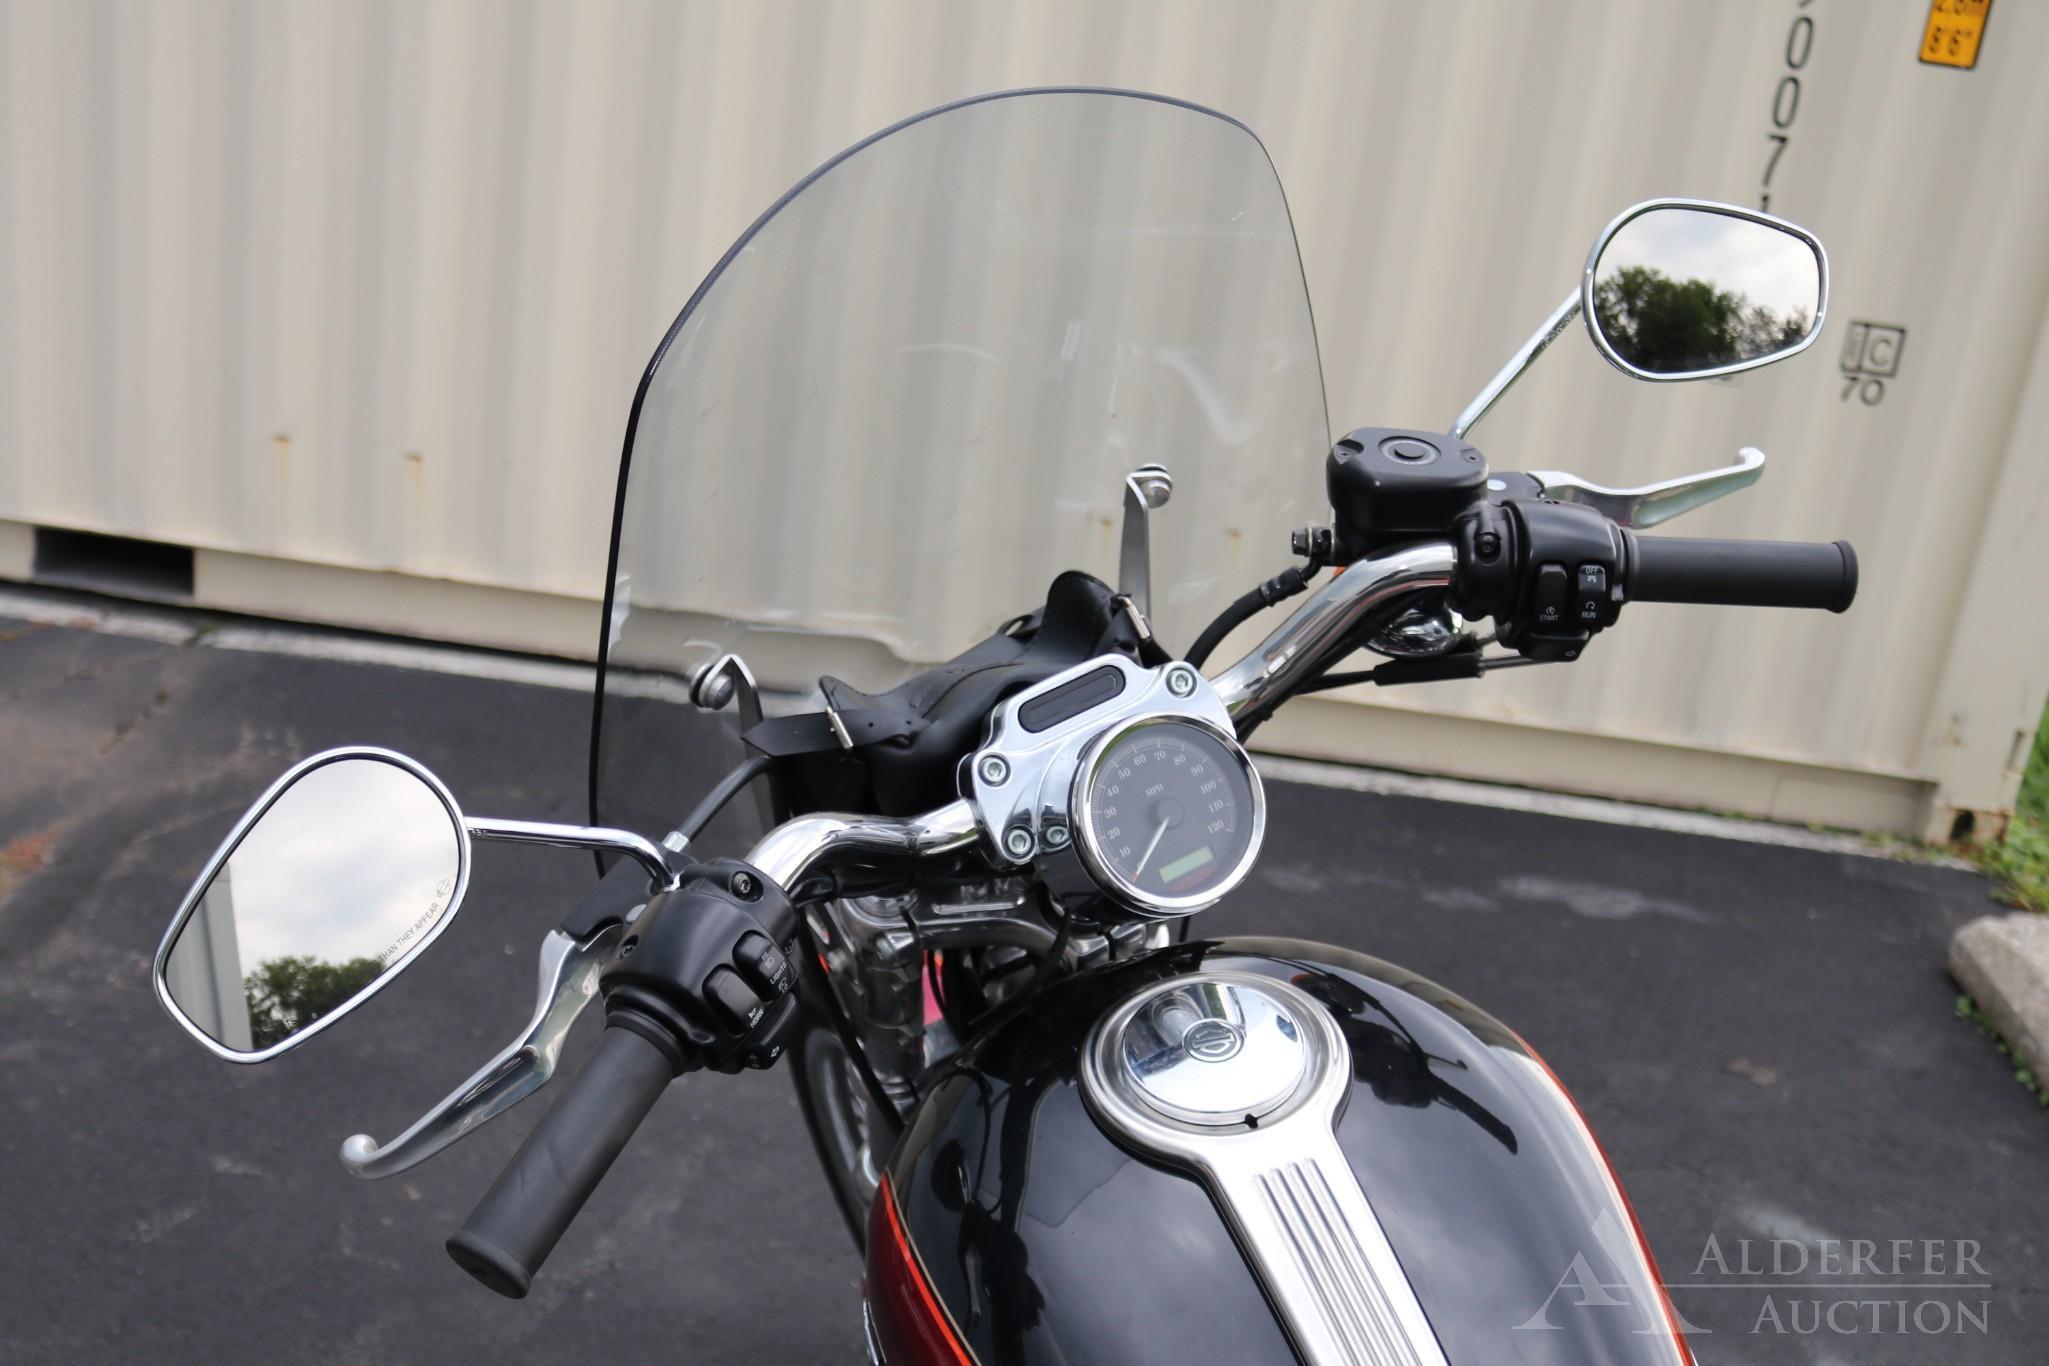 2005 Harley-Davidson XL 1200C Motorcycle, VIN # 1HD1CGP175K419945